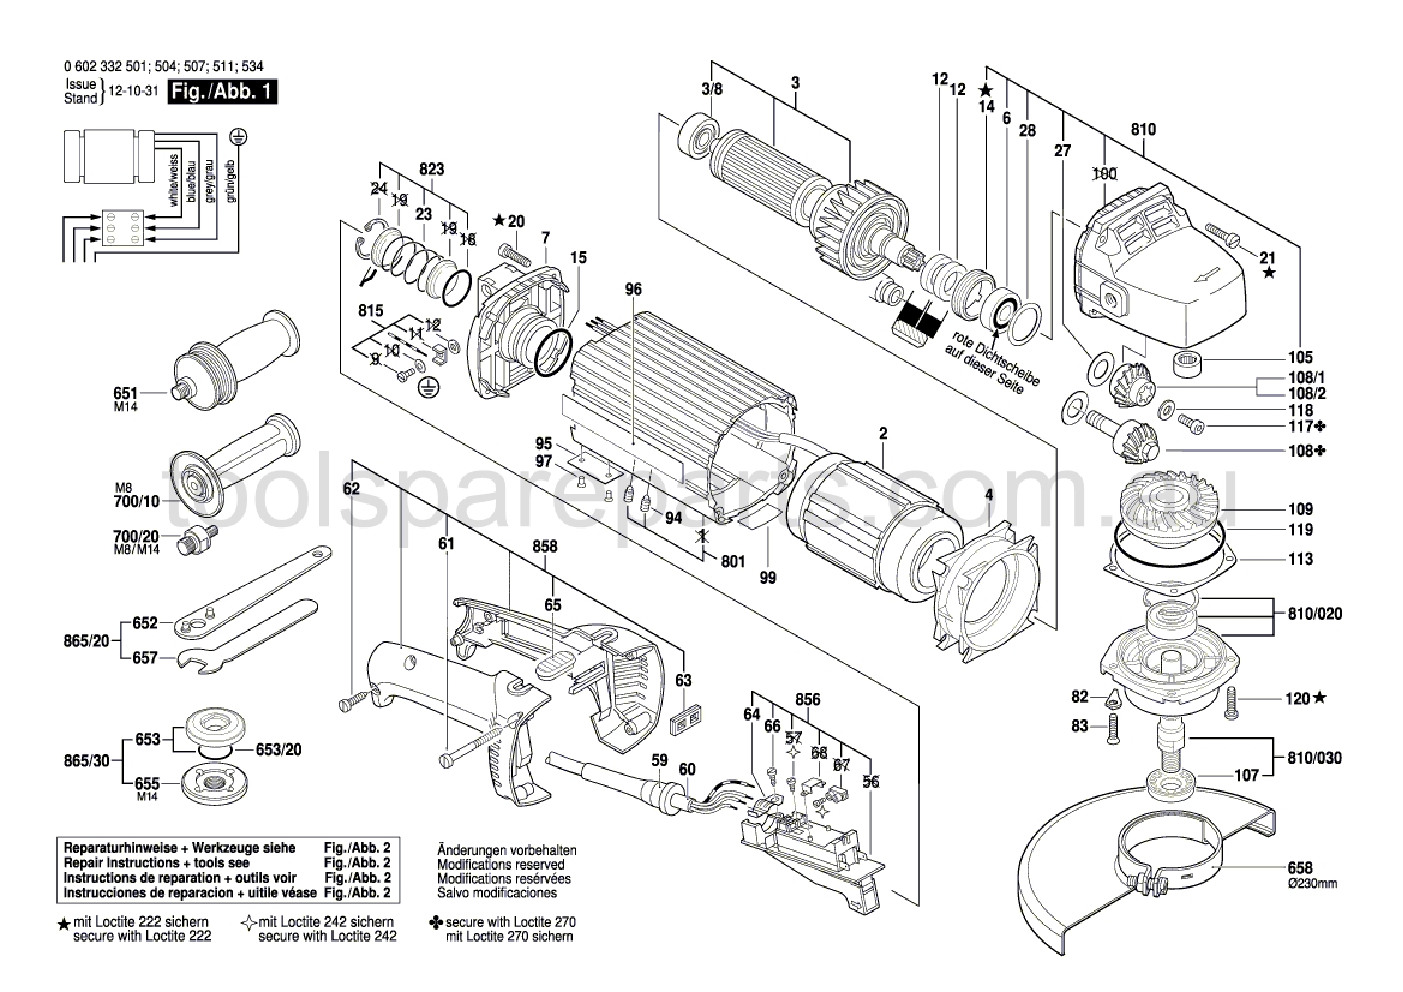 Bosch HWS 88/230 0602332501  Diagram 1